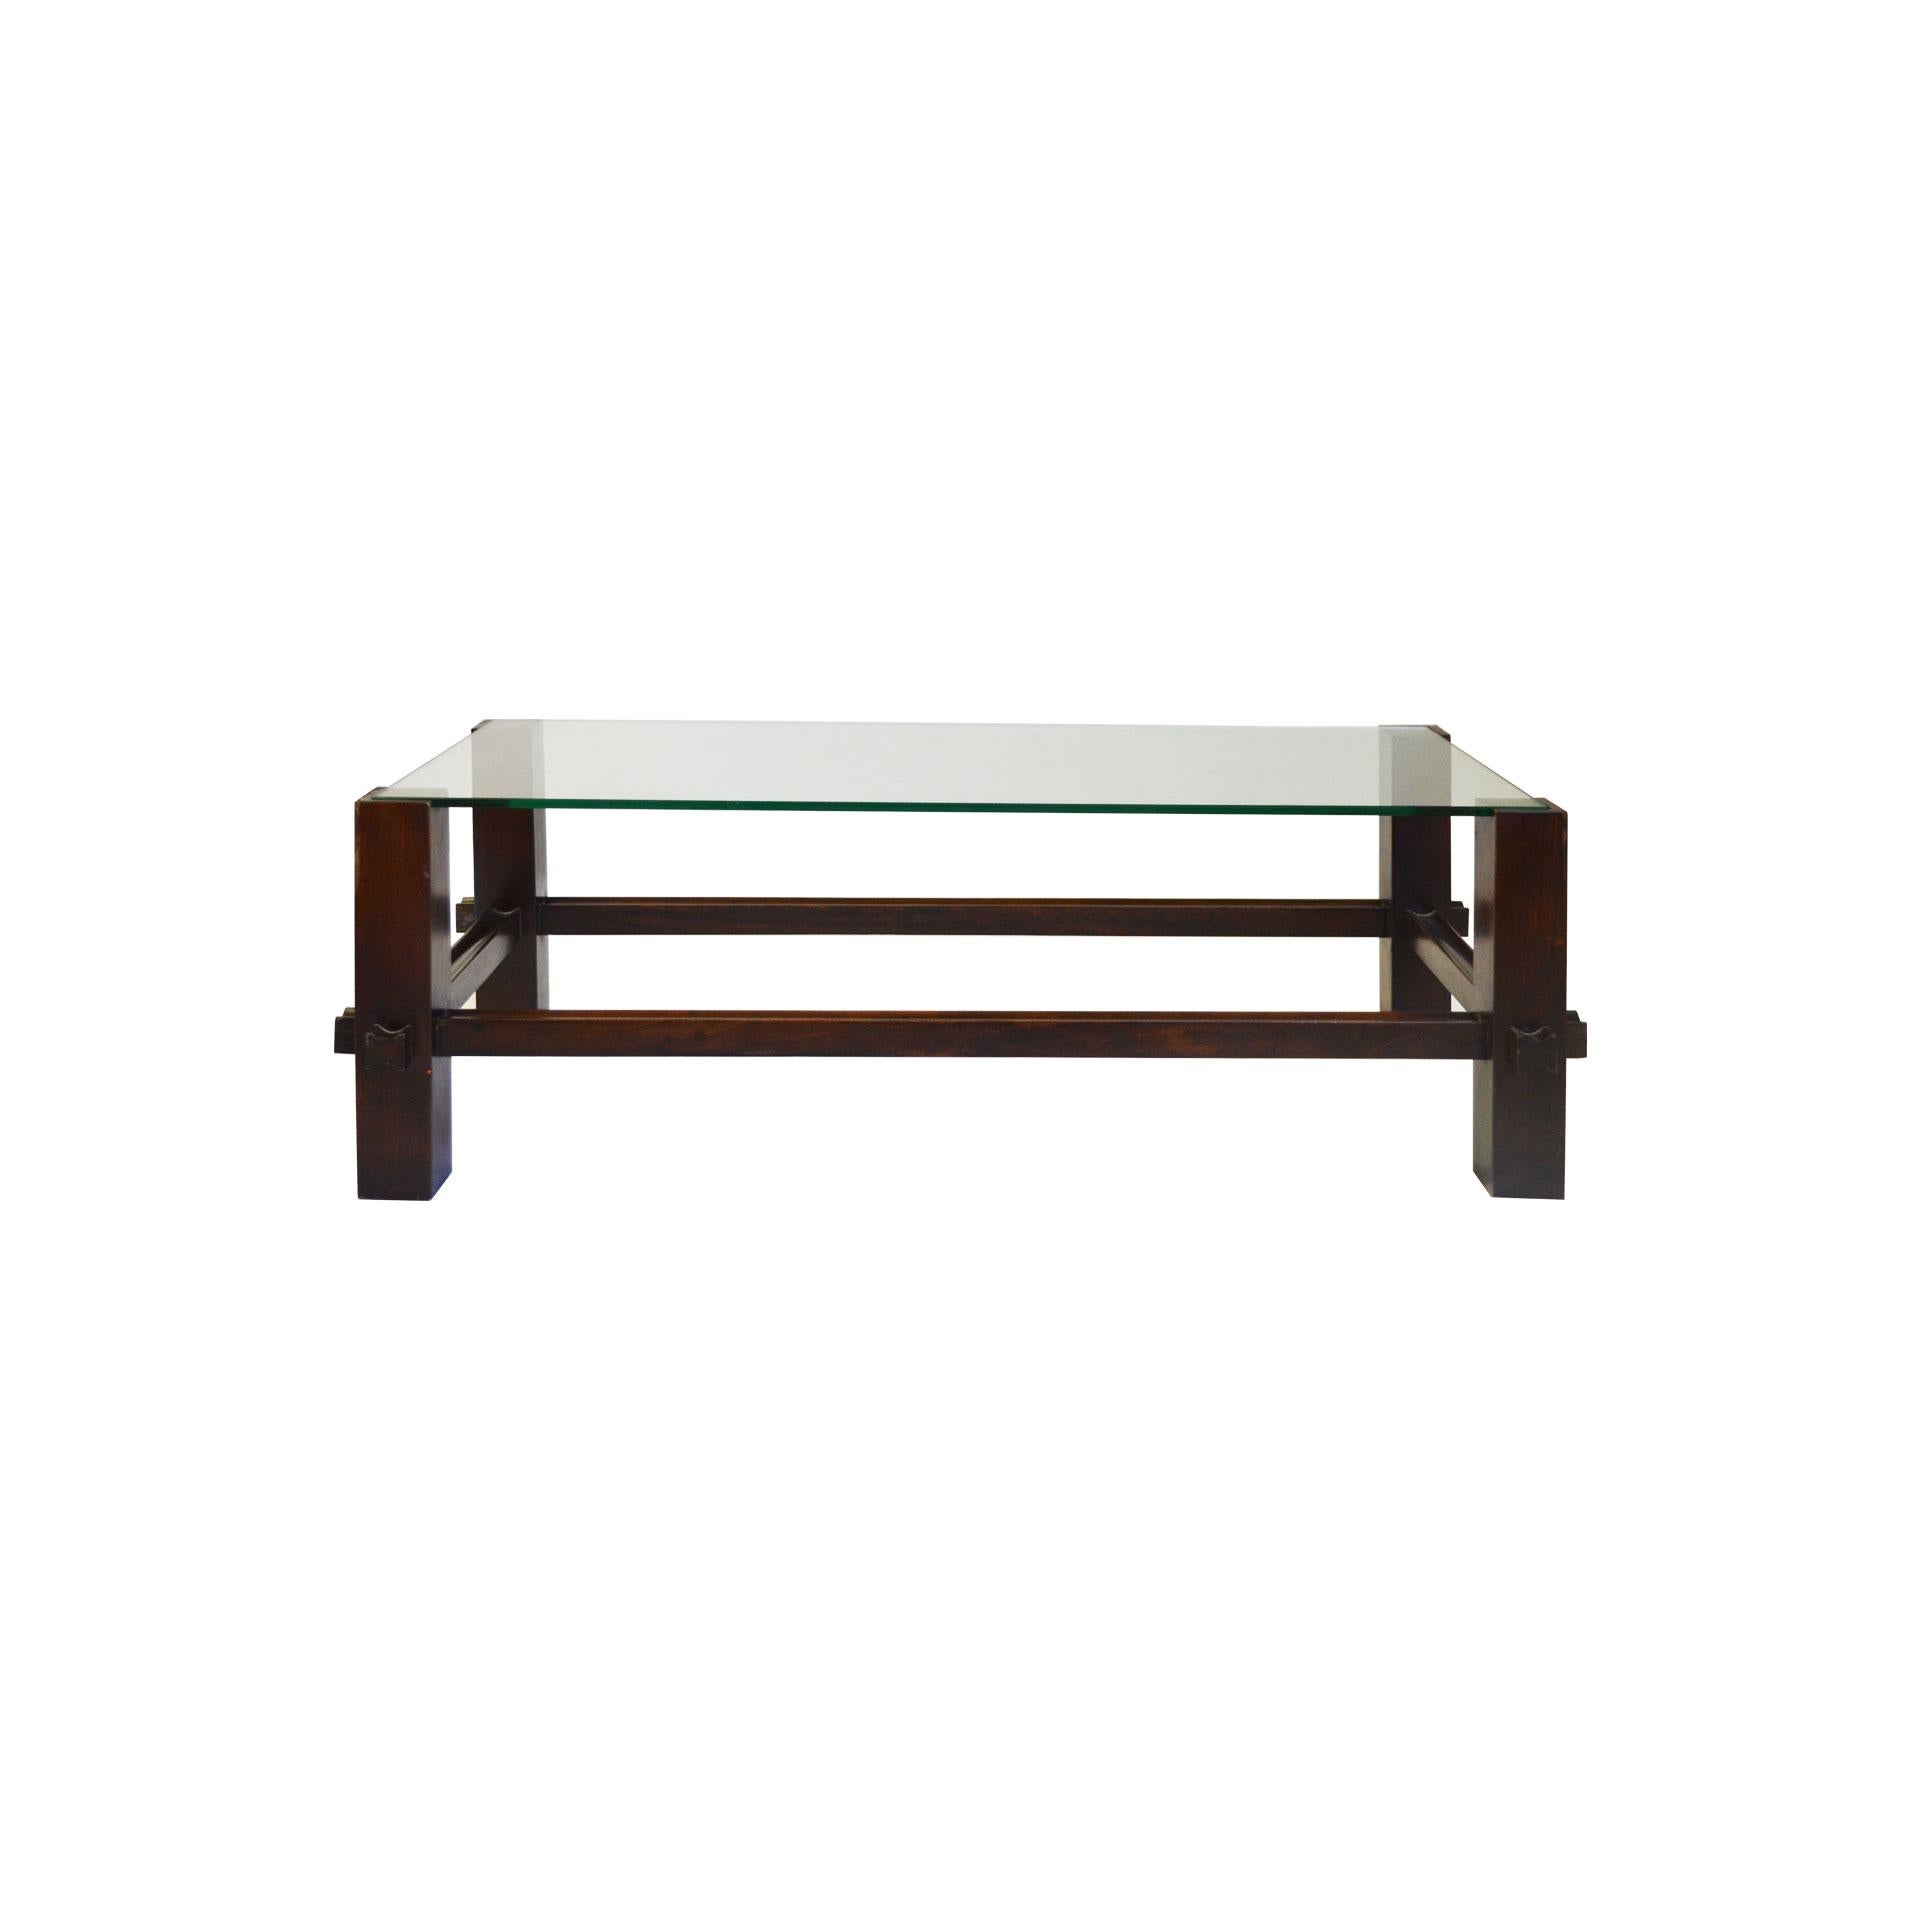 Italian 20th Century Fontana Arte Coffee Table Model 2461 in Wood and Glass